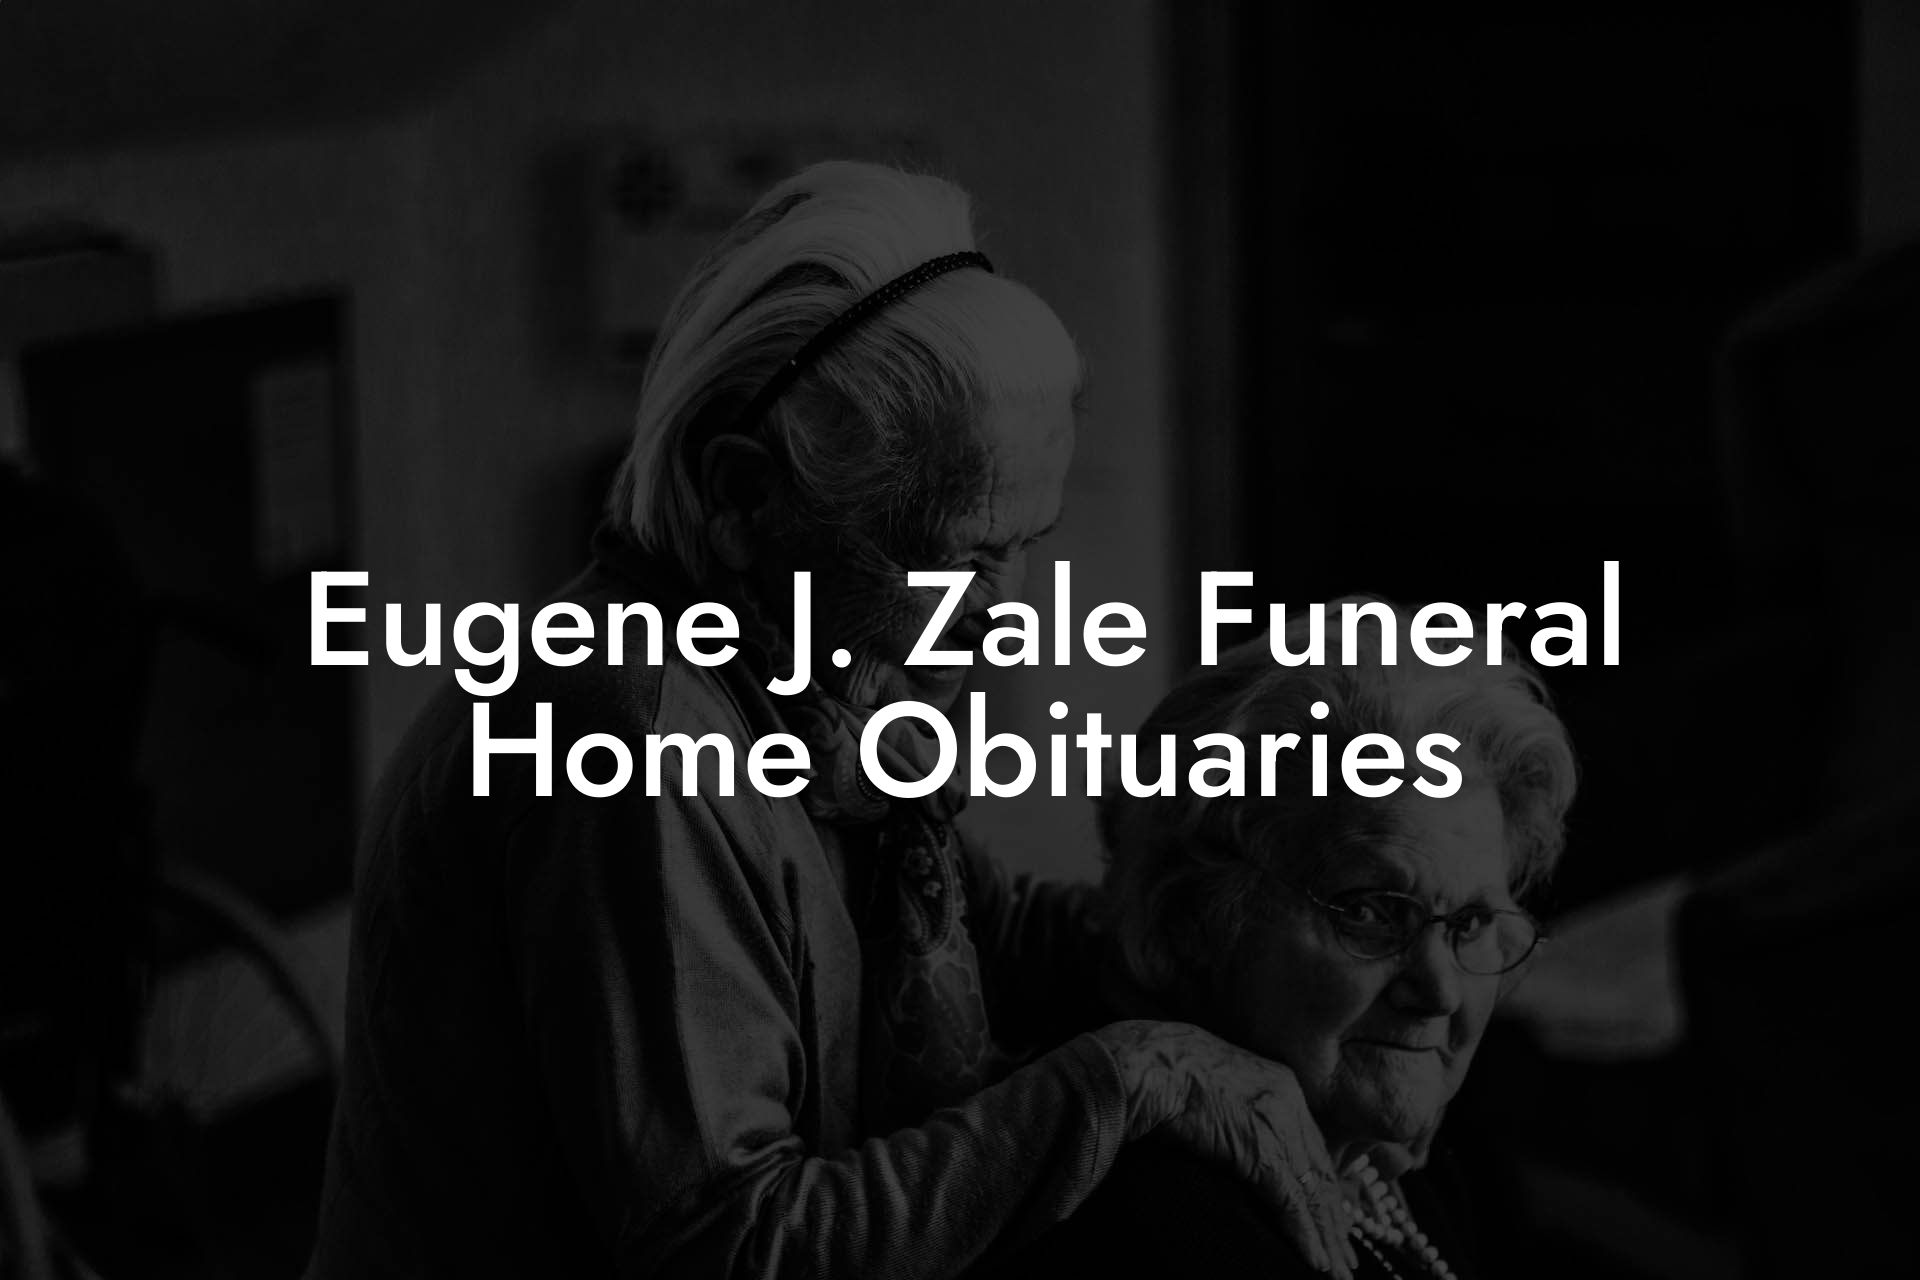 Eugene J. Zale Funeral Home Obituaries